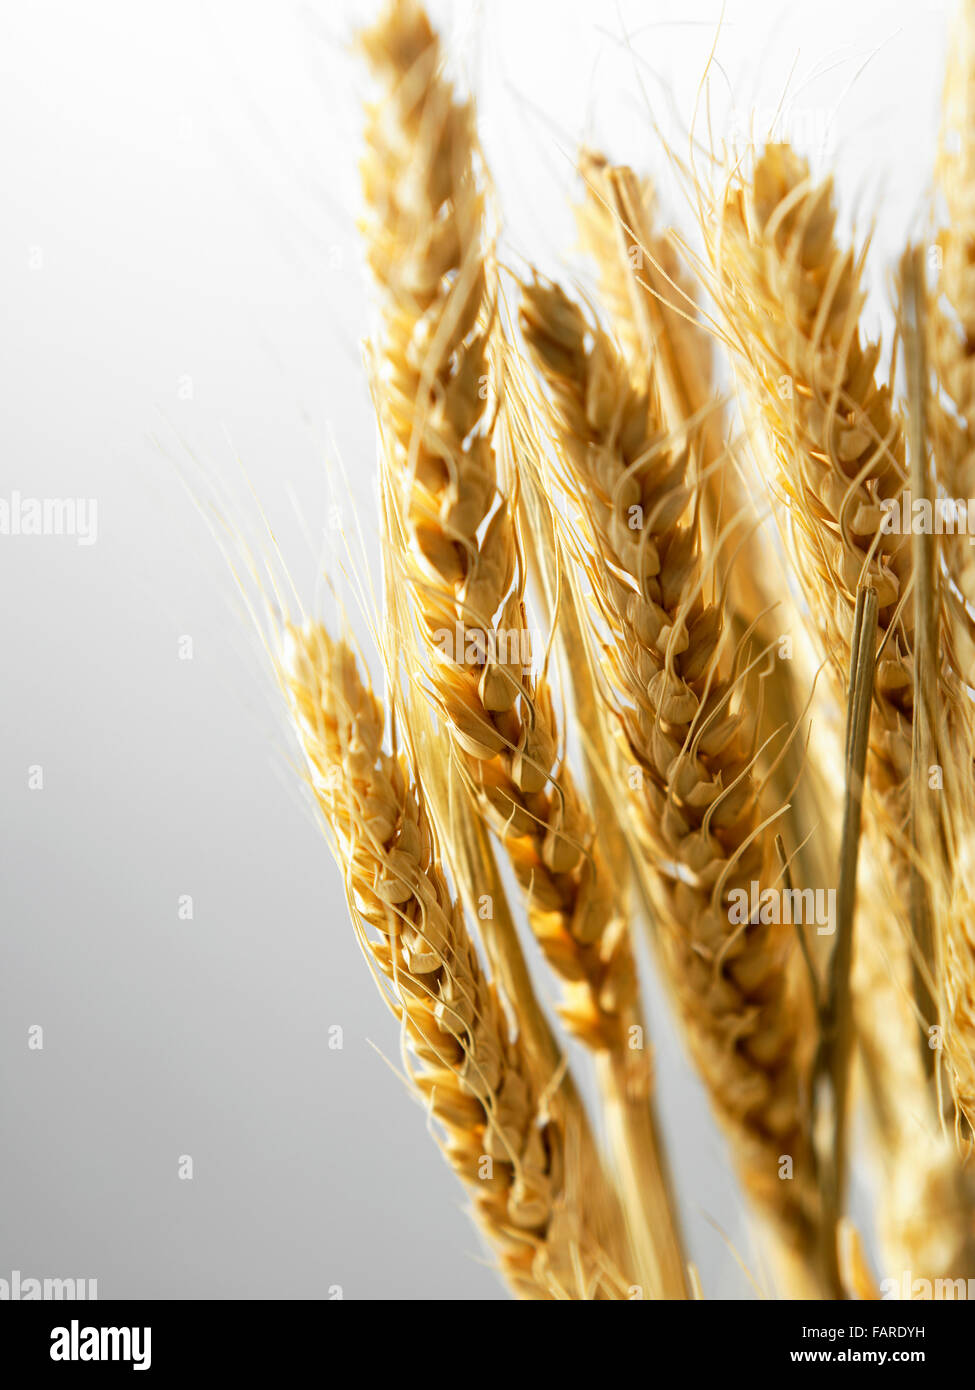 Wheat stems on plain background. Stock Photo